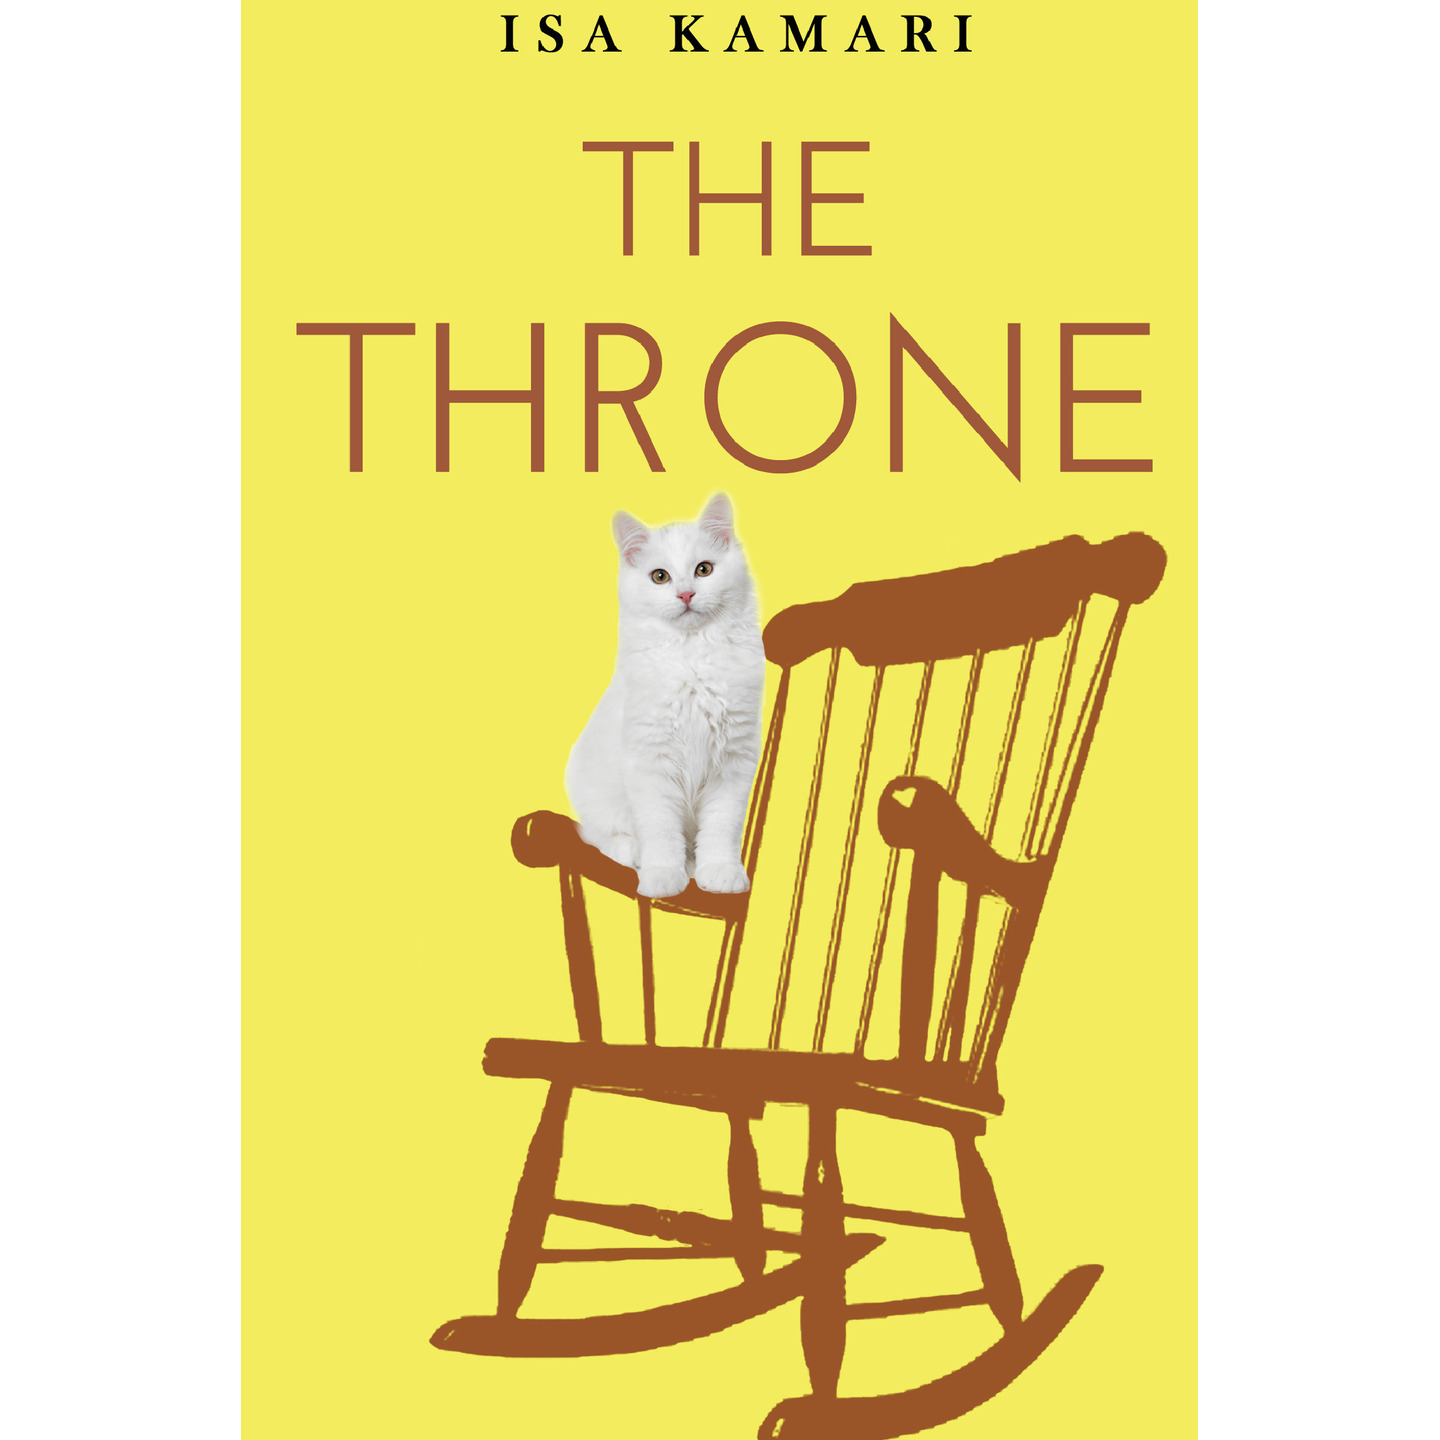 Pre-order The Throne by Isa Kamari